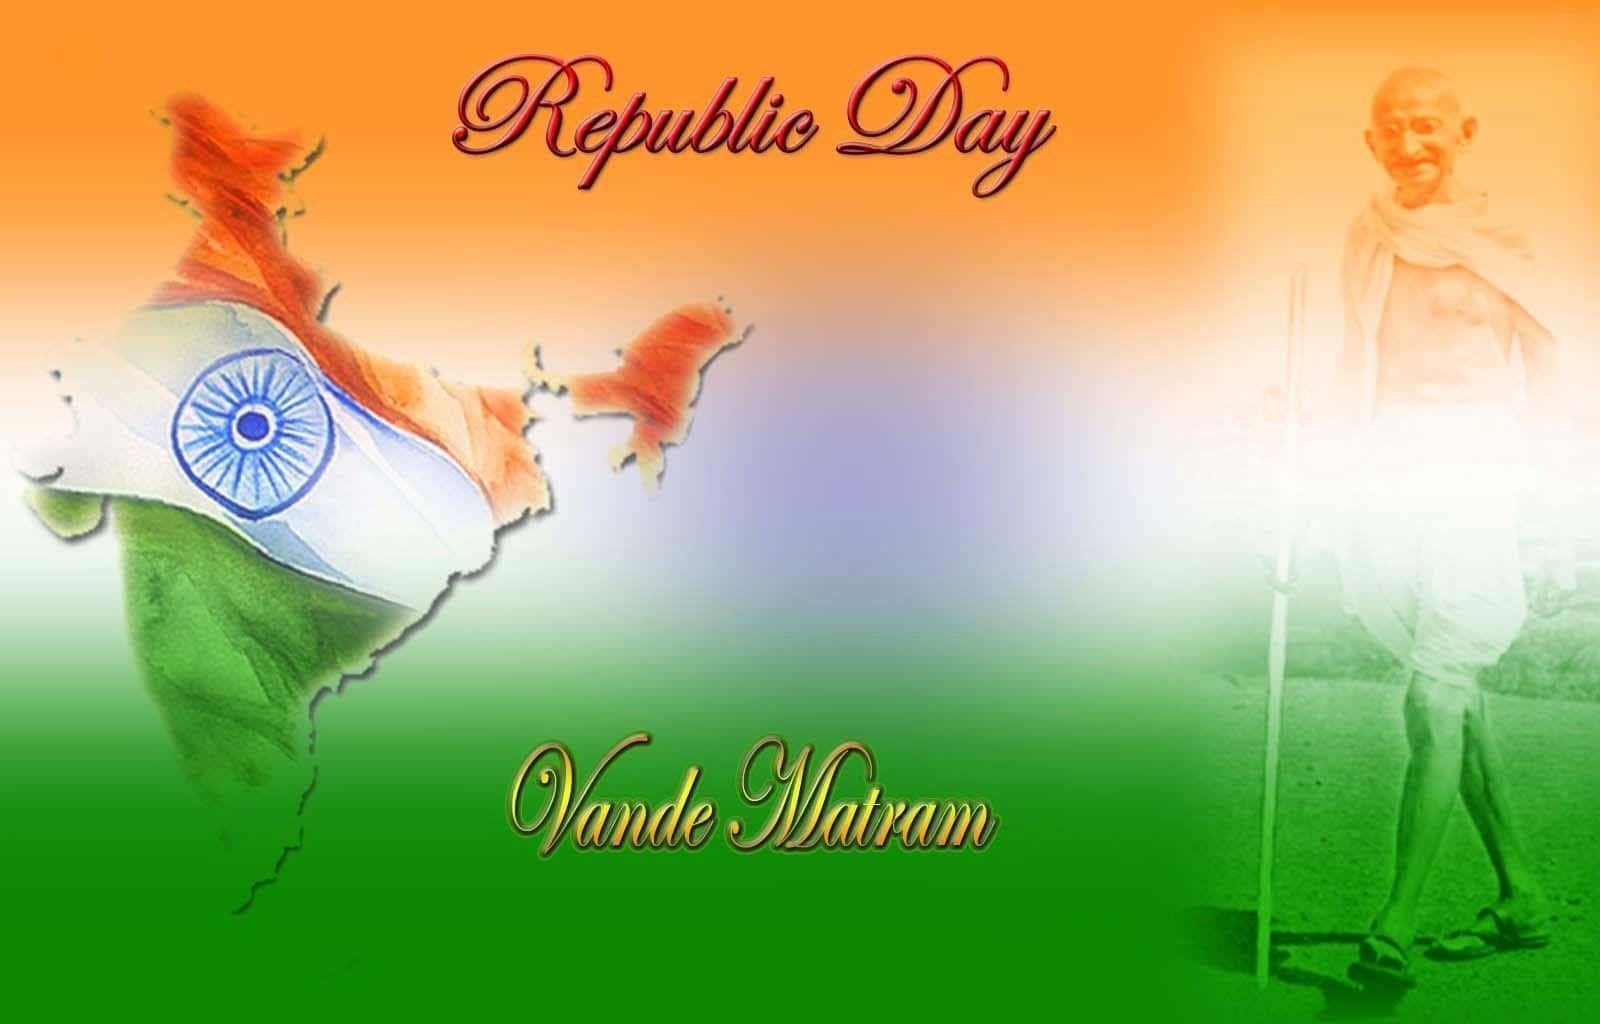 Celebrating Republic Day with Pride